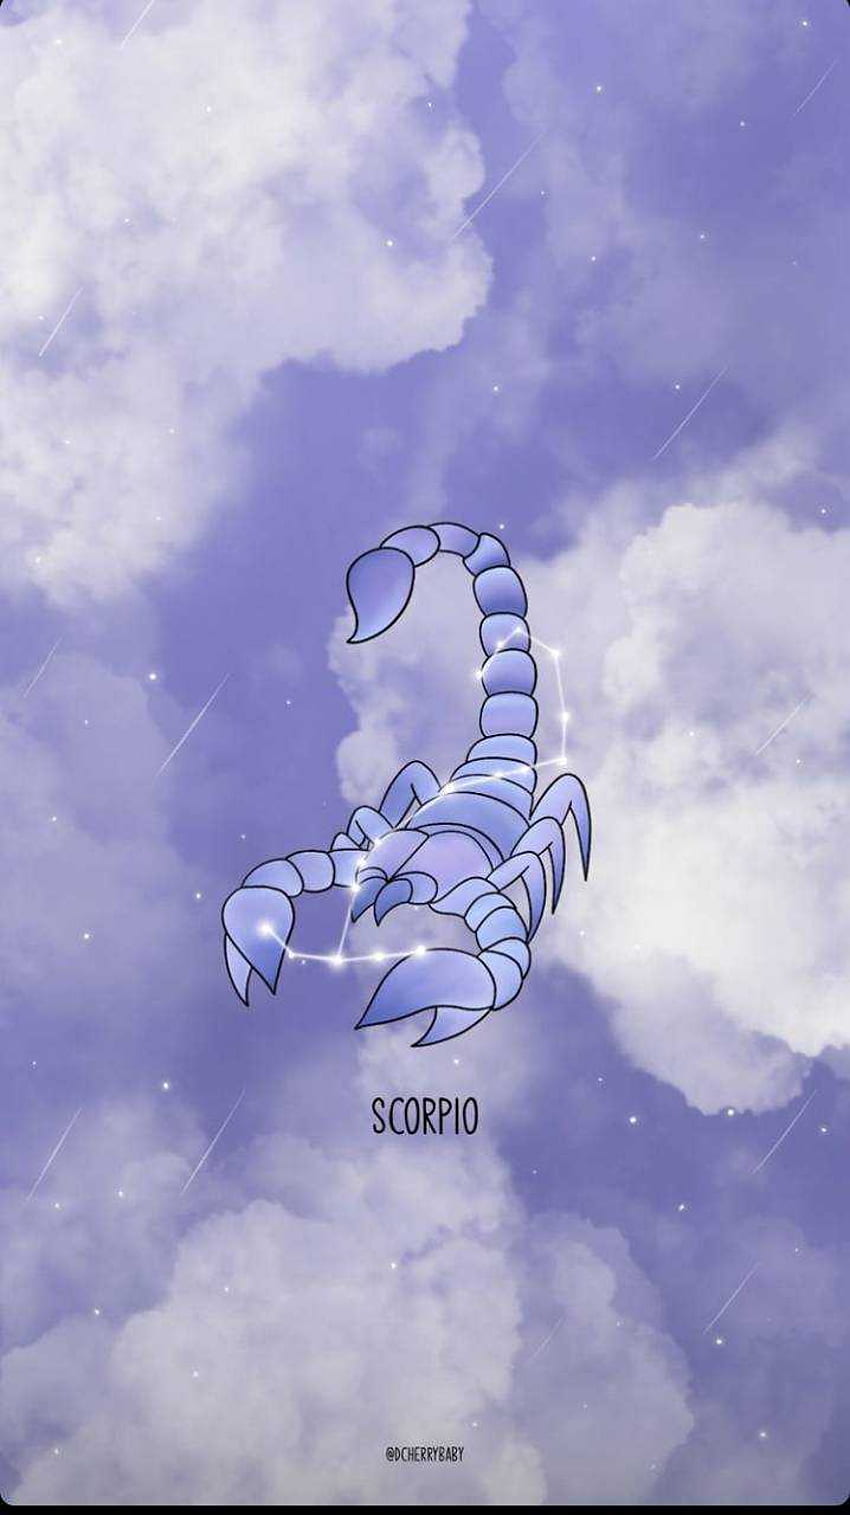 Jo on X iPhone wallpaper Im a Scorpio kind of mood Scorpio  scorpiogirl Scorpion wallpaper aesthetic aestheticmood blue  httpstcoZKyA5iwSoV  X